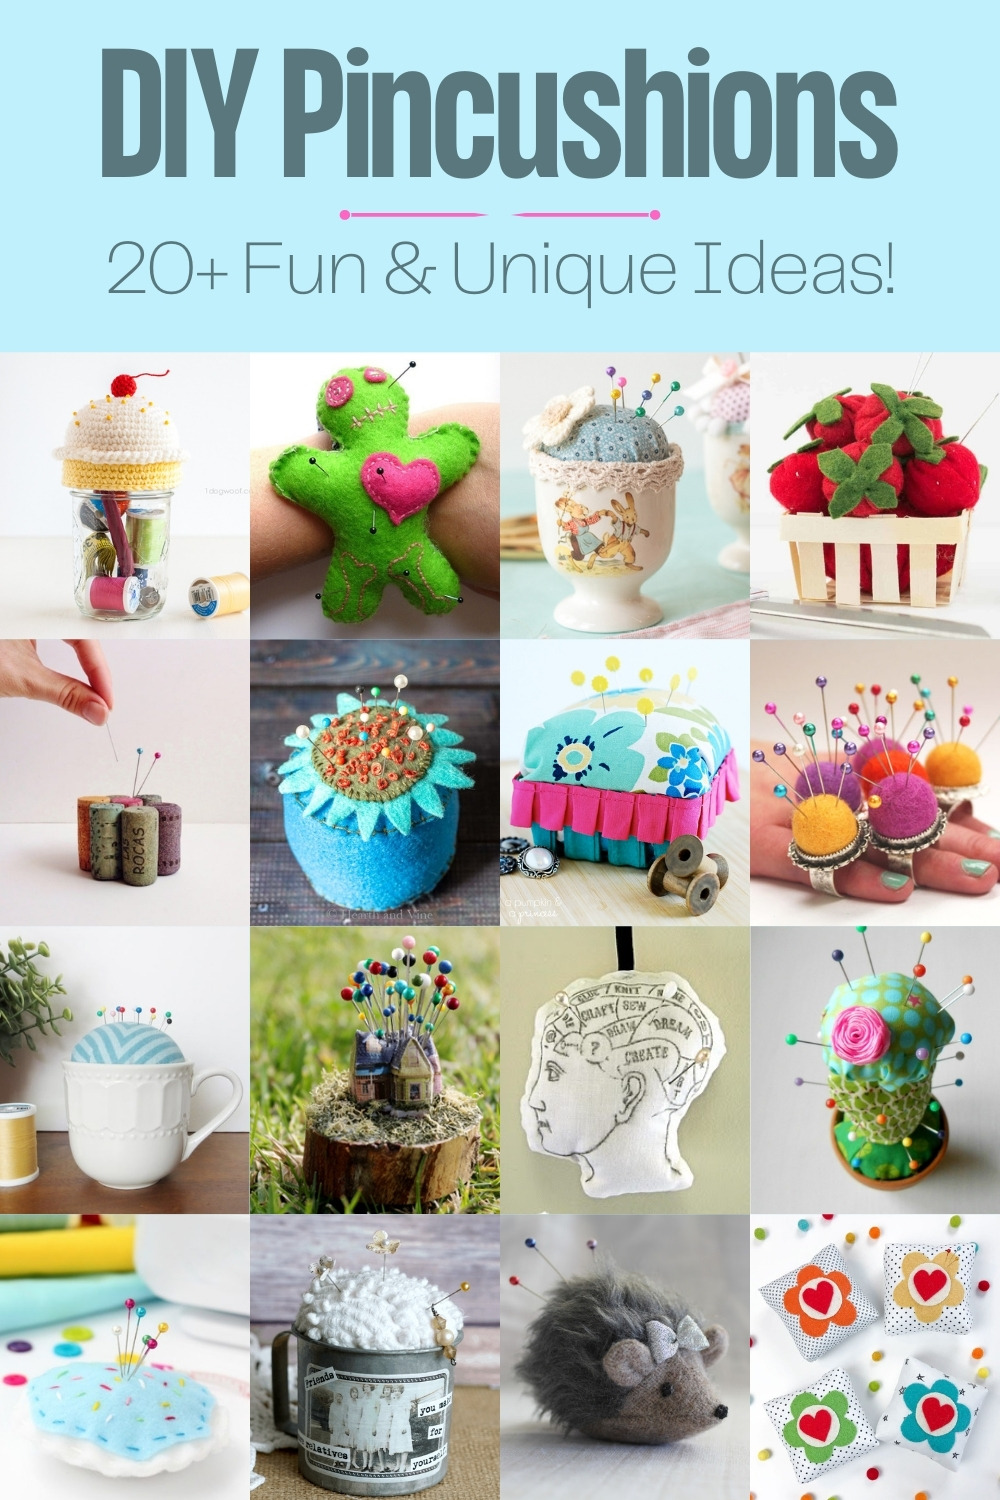 Over 20 Fun & Unique DIY Pincushions